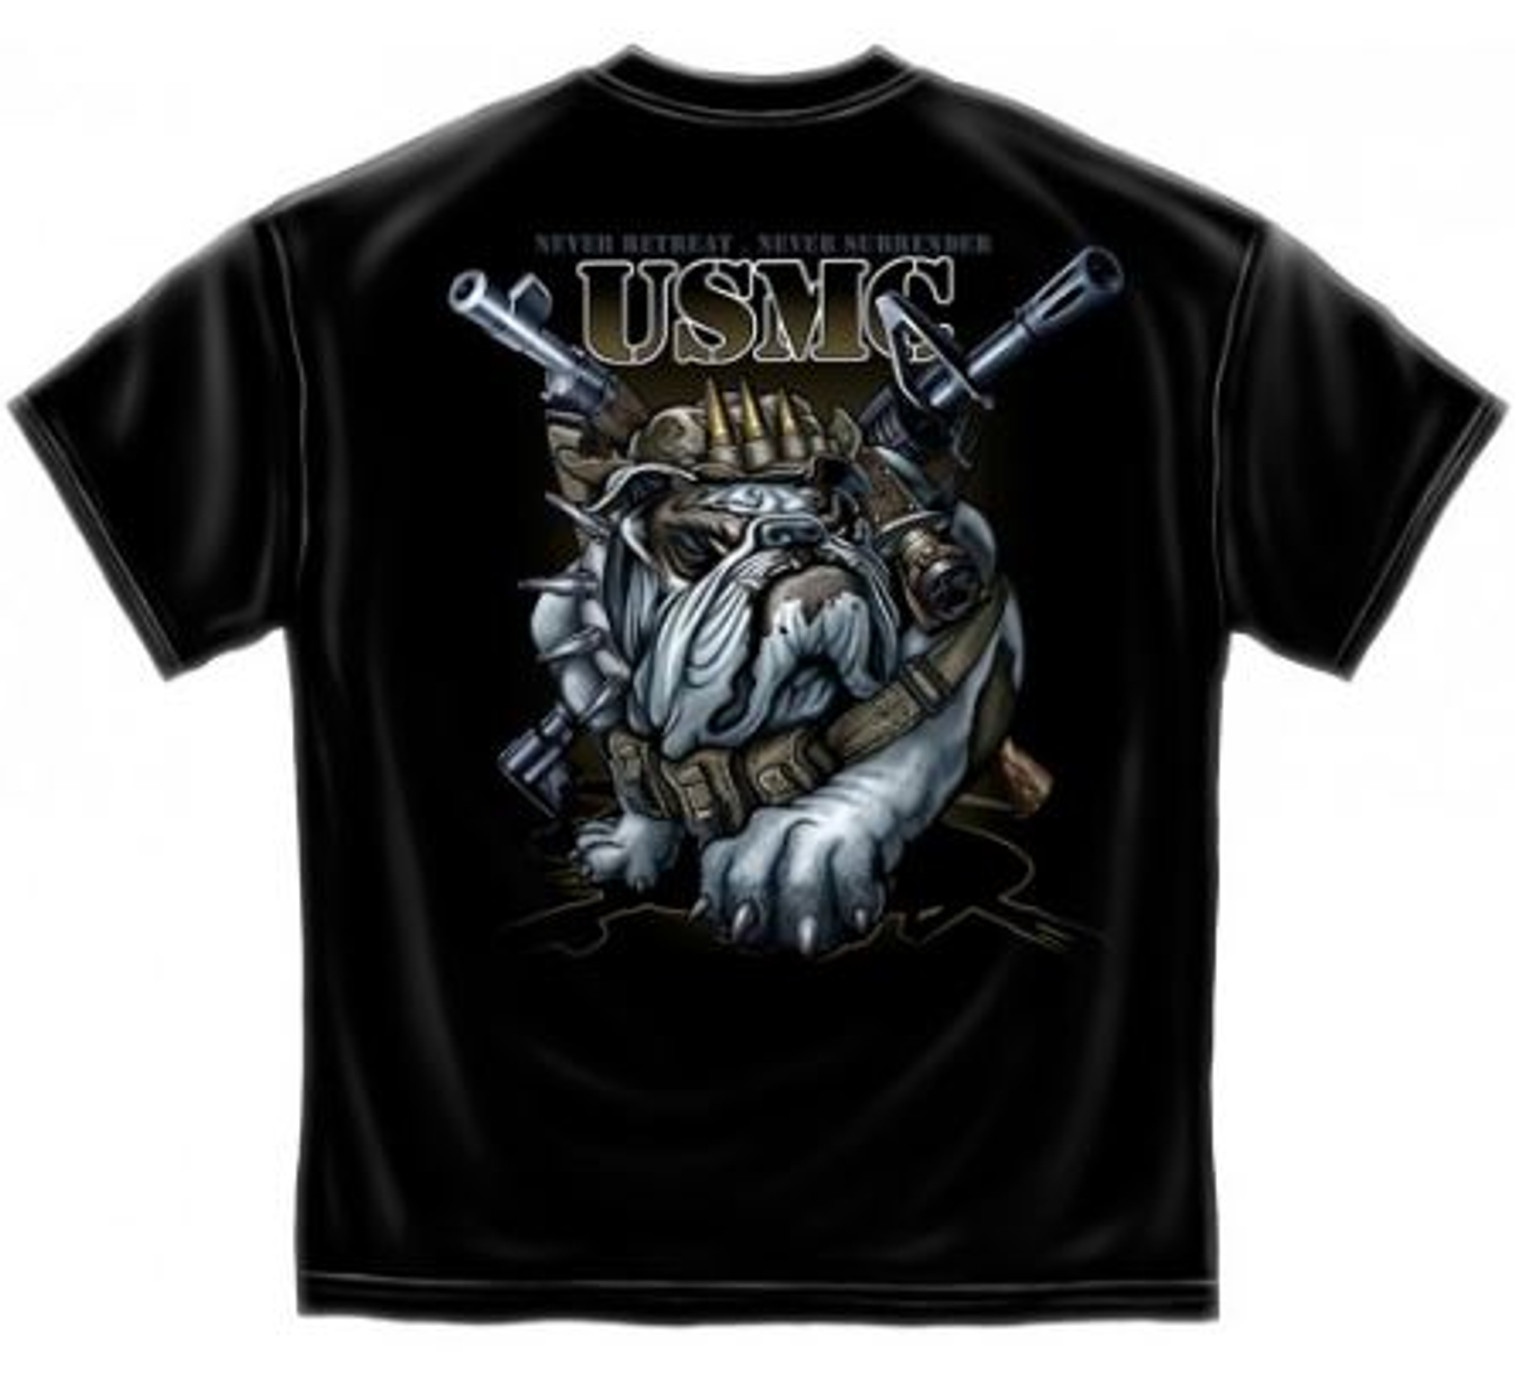 USMC "Never Retreat Never Surrender" T-Shirt